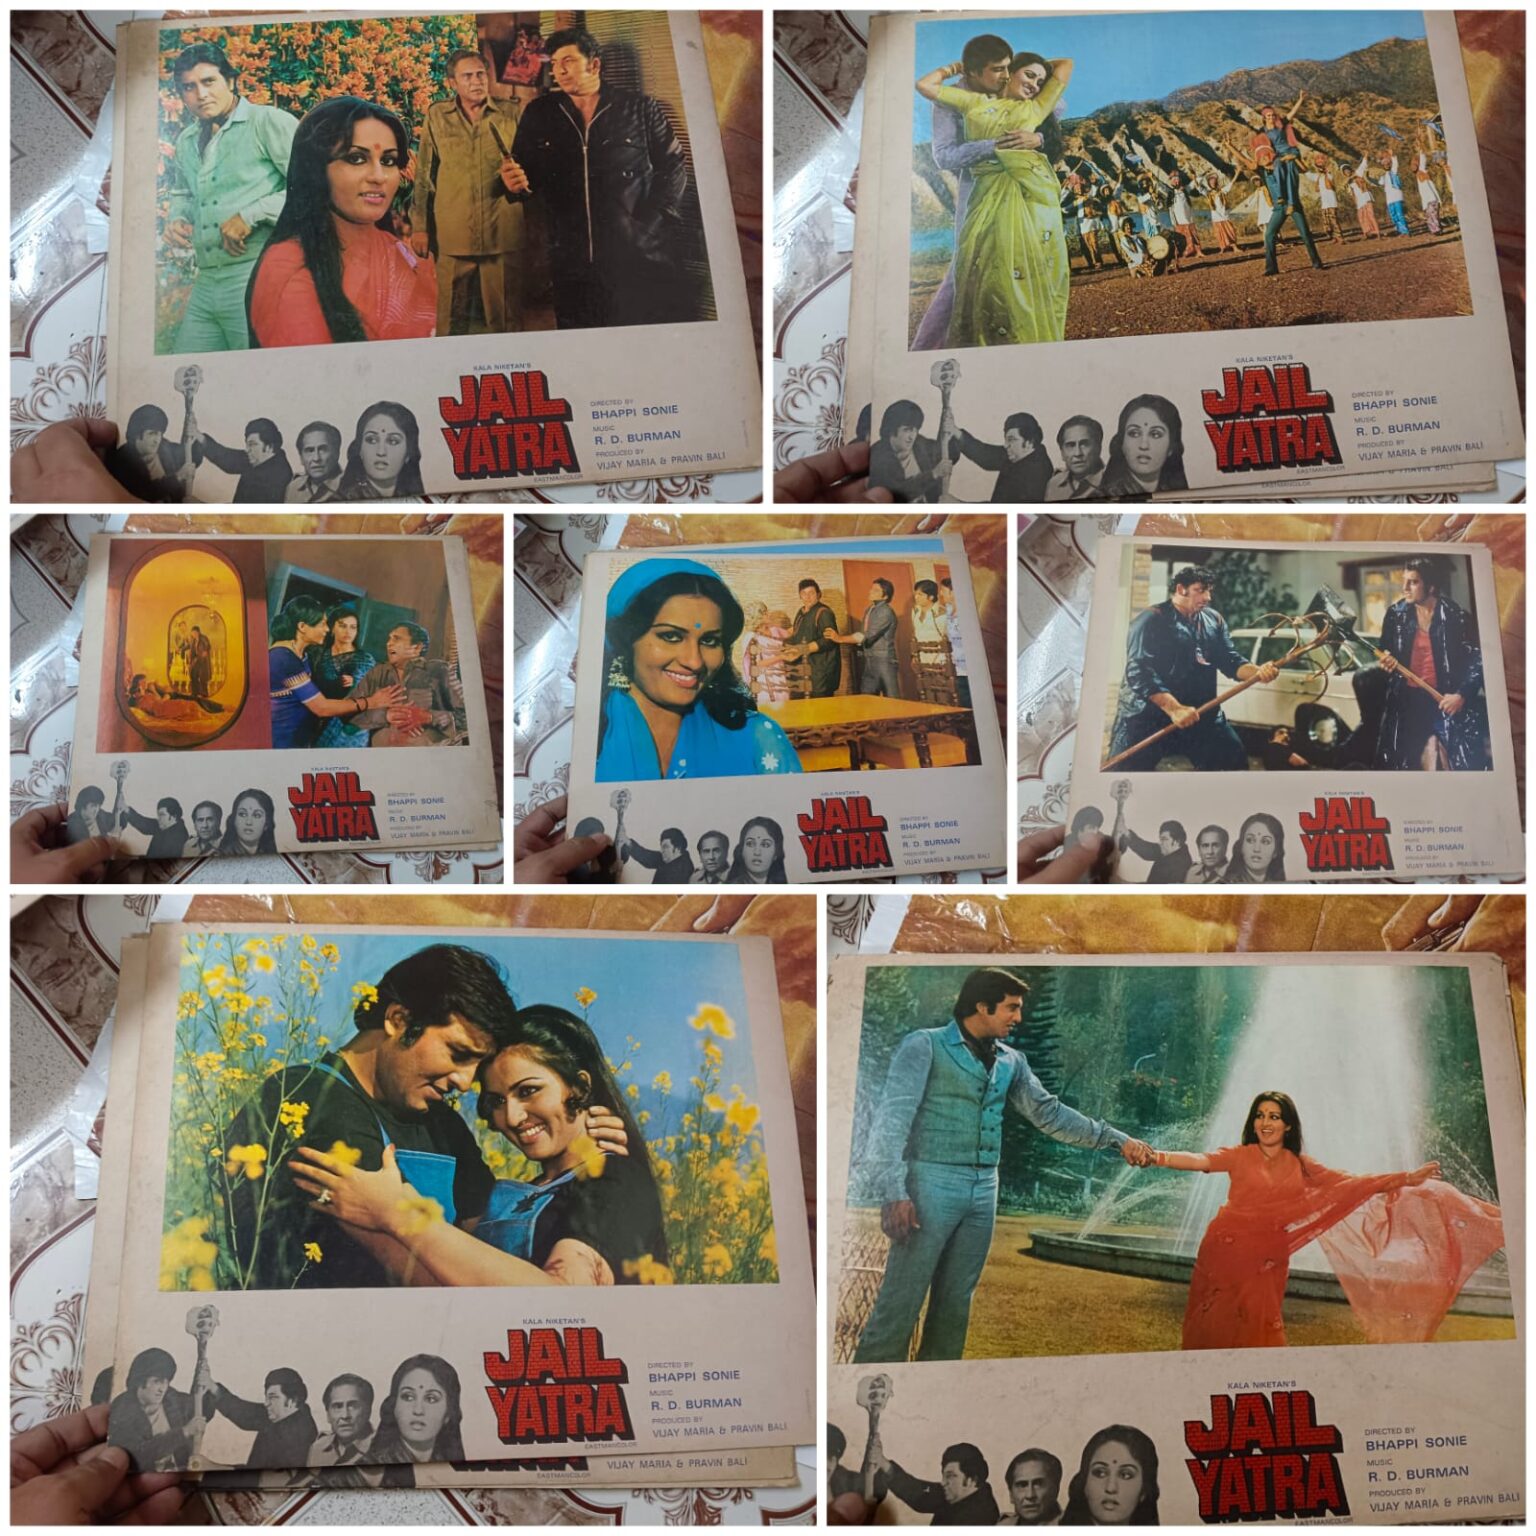 JAIL YATRA Bollywood movie lobby card